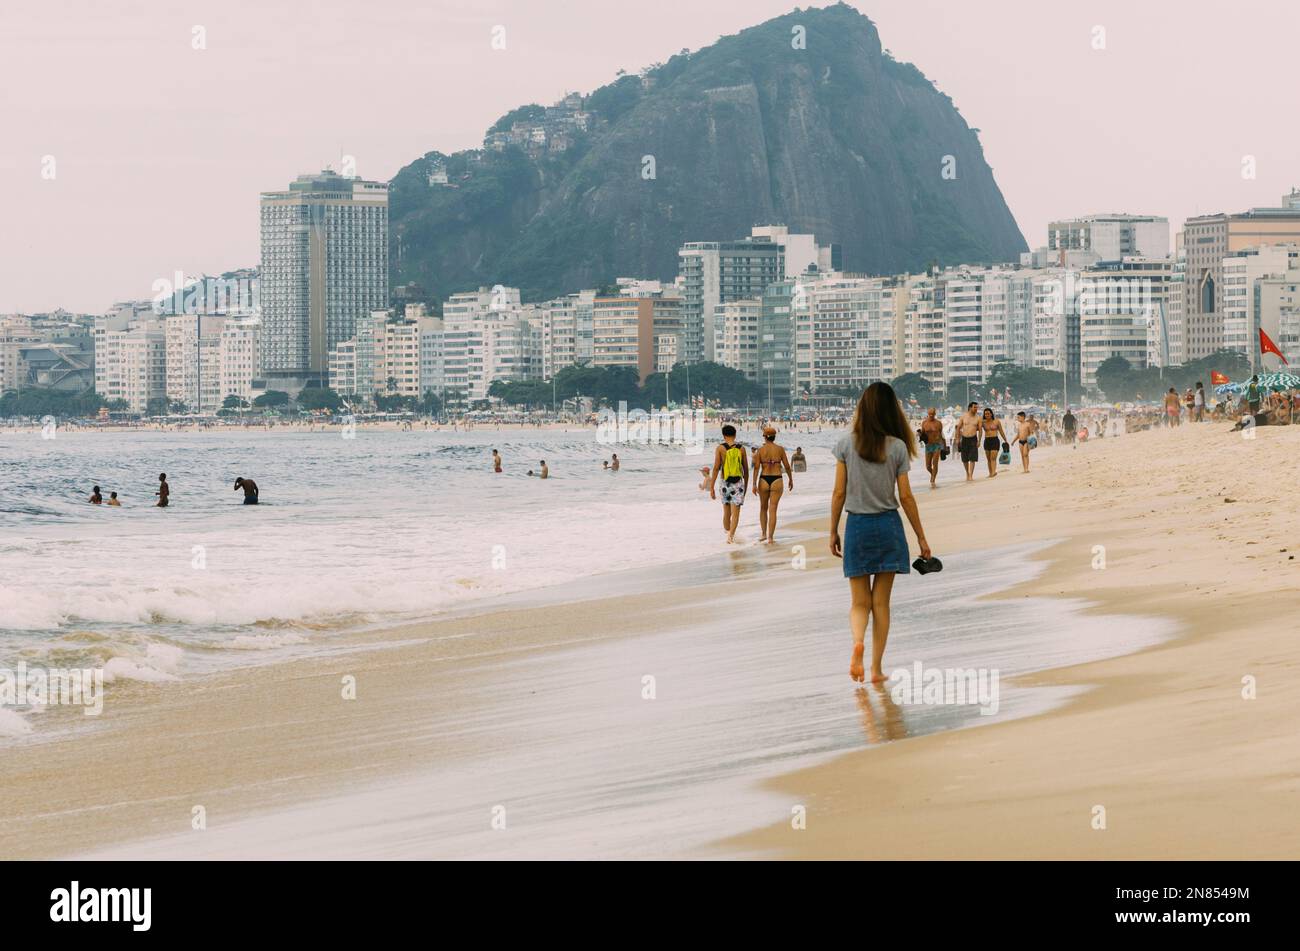 Rio de Janeiro, Brazil - February 7, 2023: People at Copacabana beach in Rio de Janeiro, Brazil on a cloudy day Stock Photo